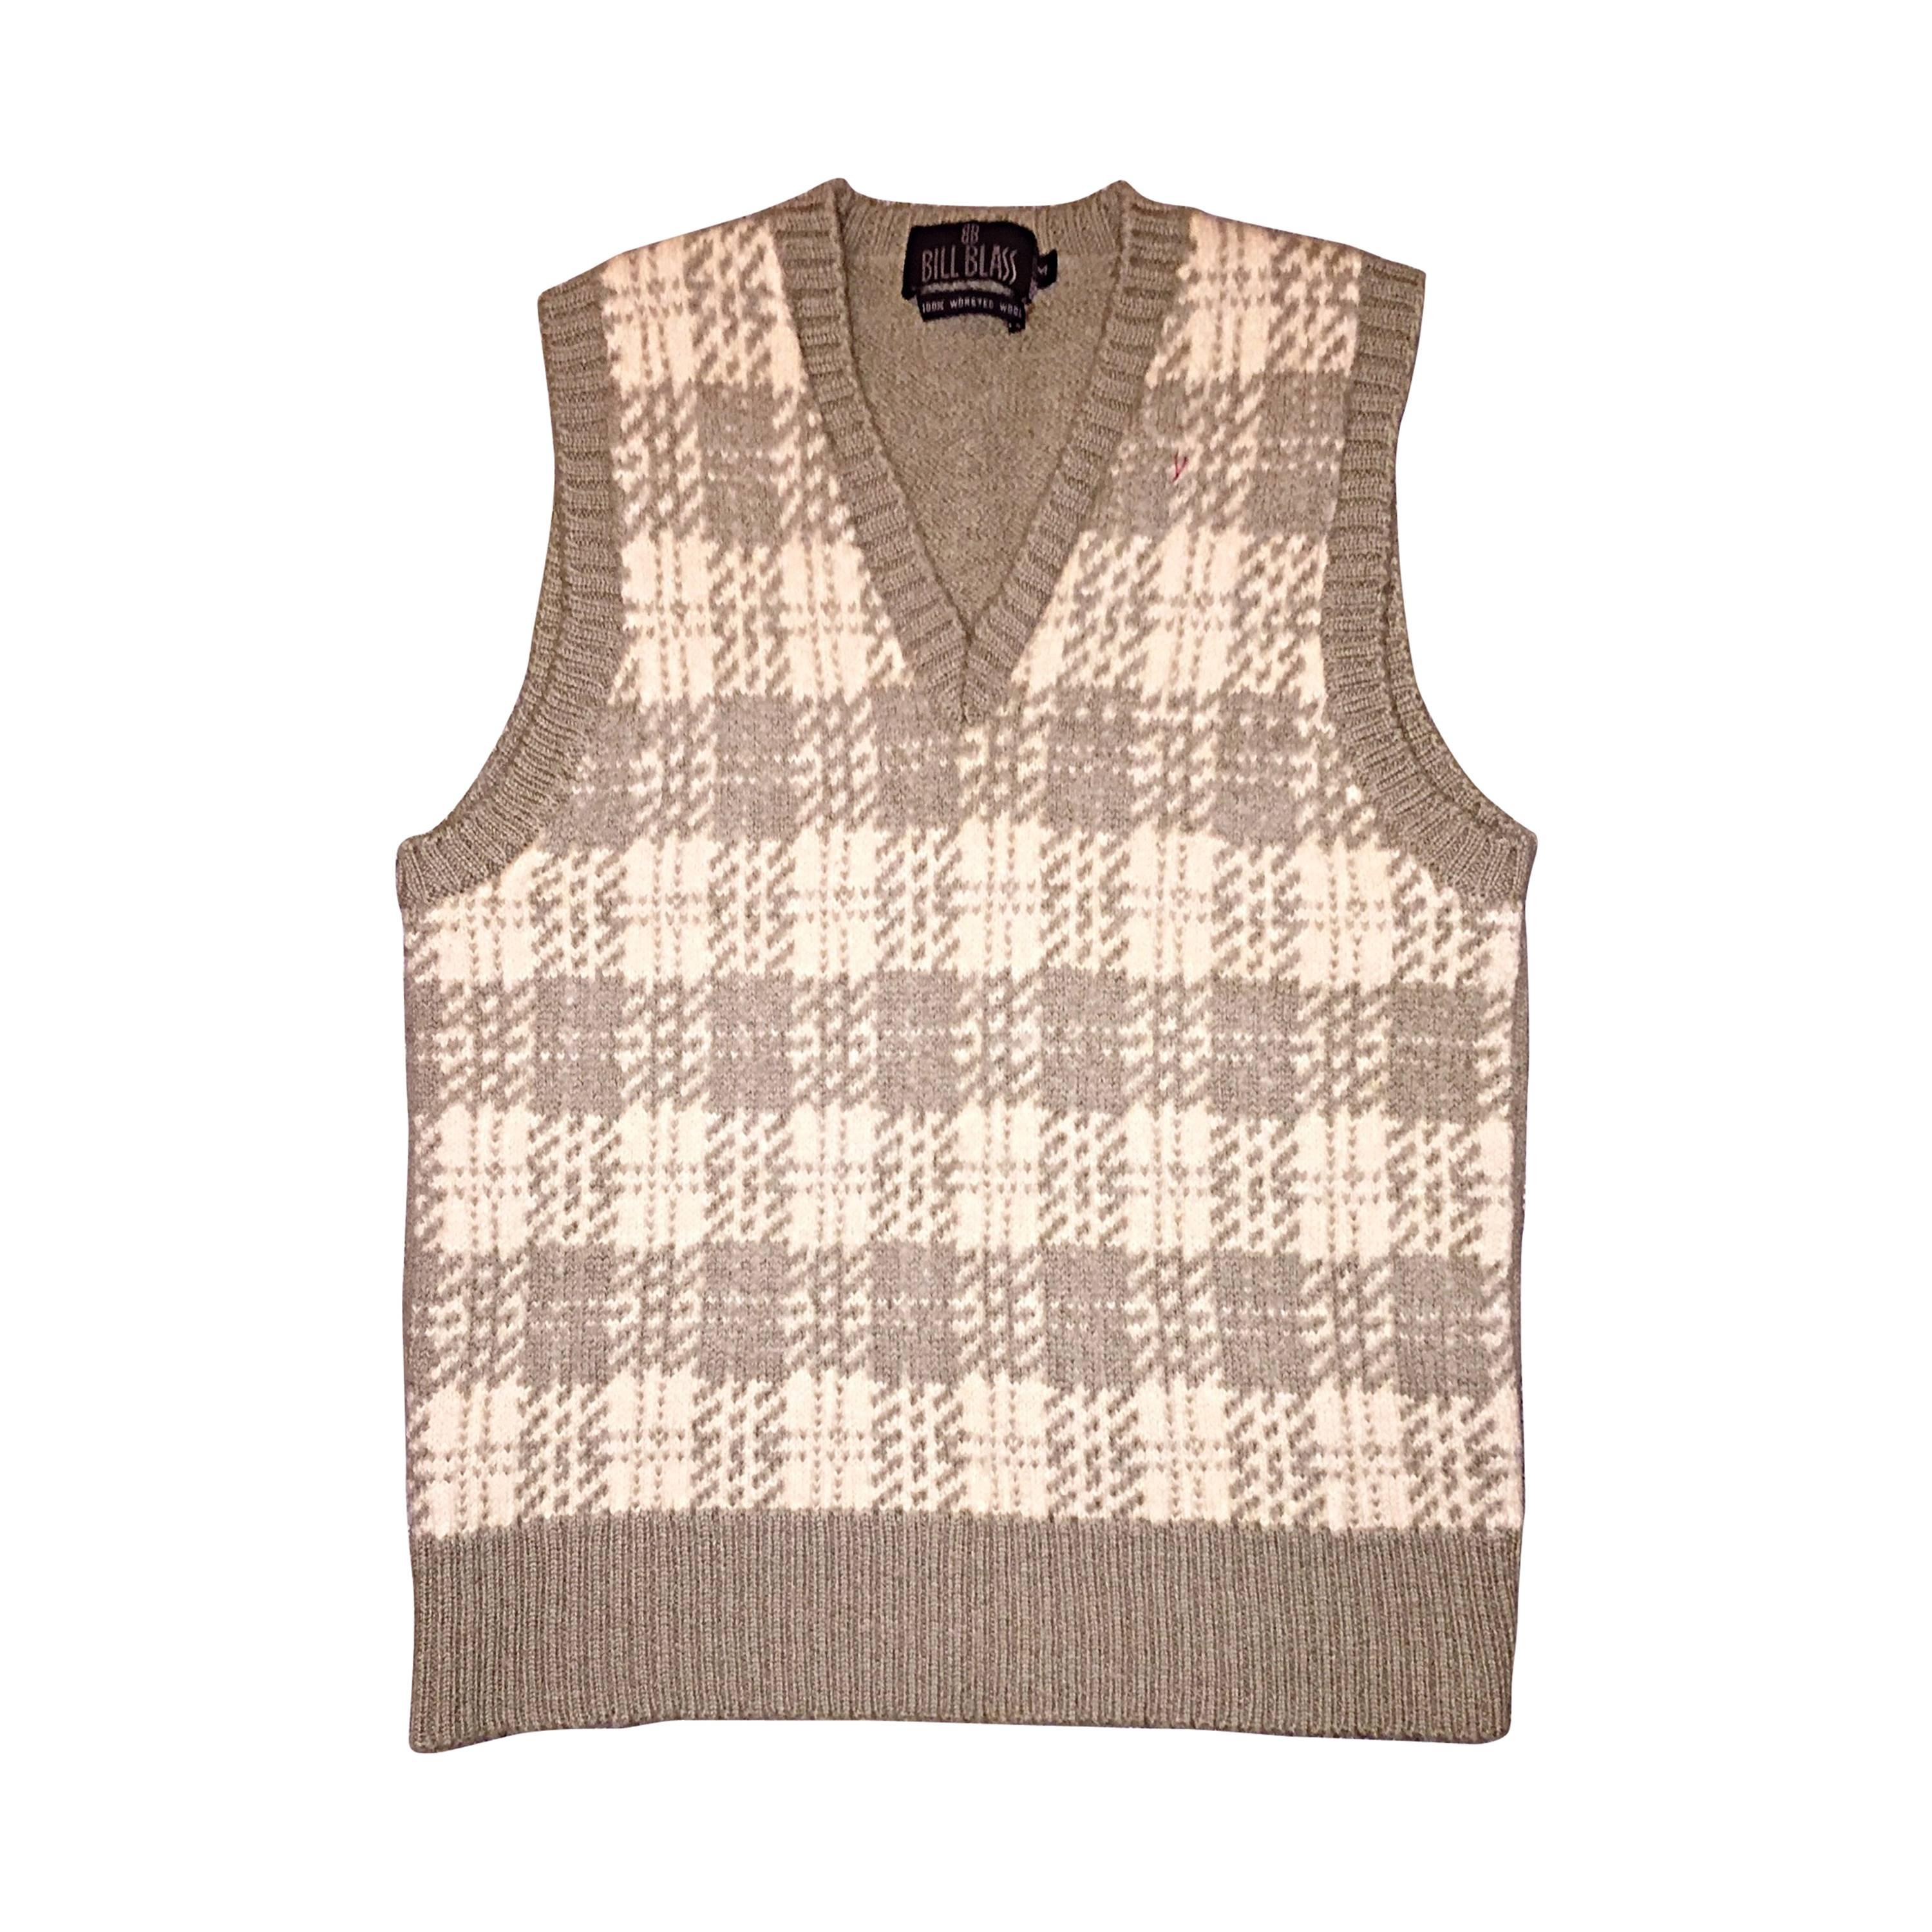 Vintage 1970s Bill Blass Tan + Ivory Plaid Mohair Wool Sweater Vest / Jumper